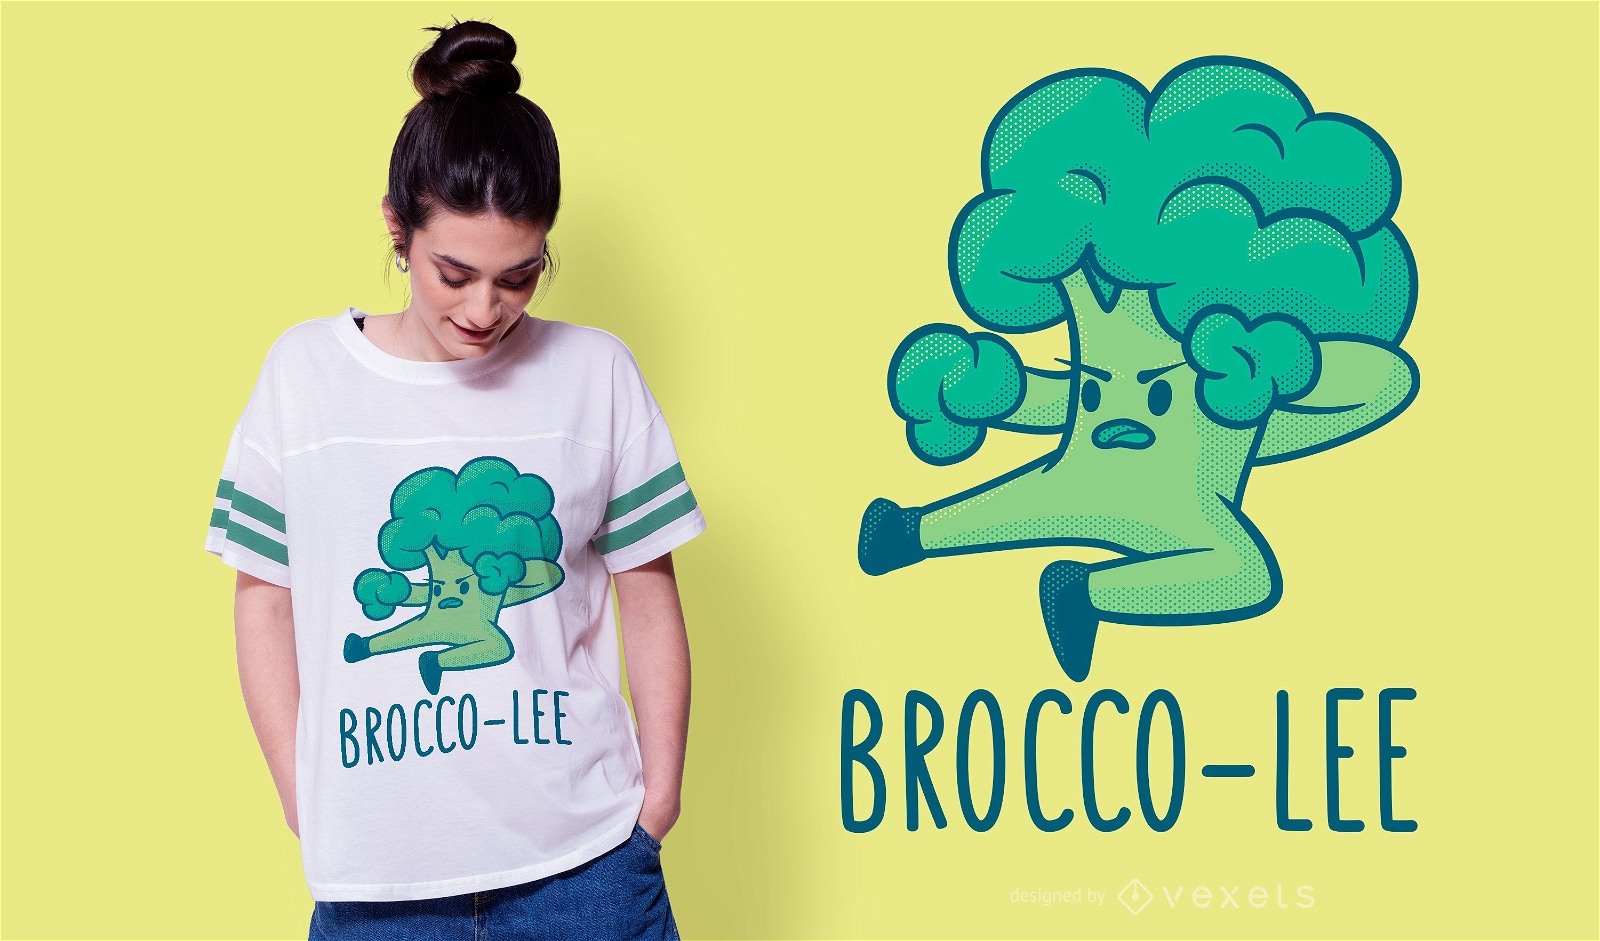 Brocco lee t-shirt design